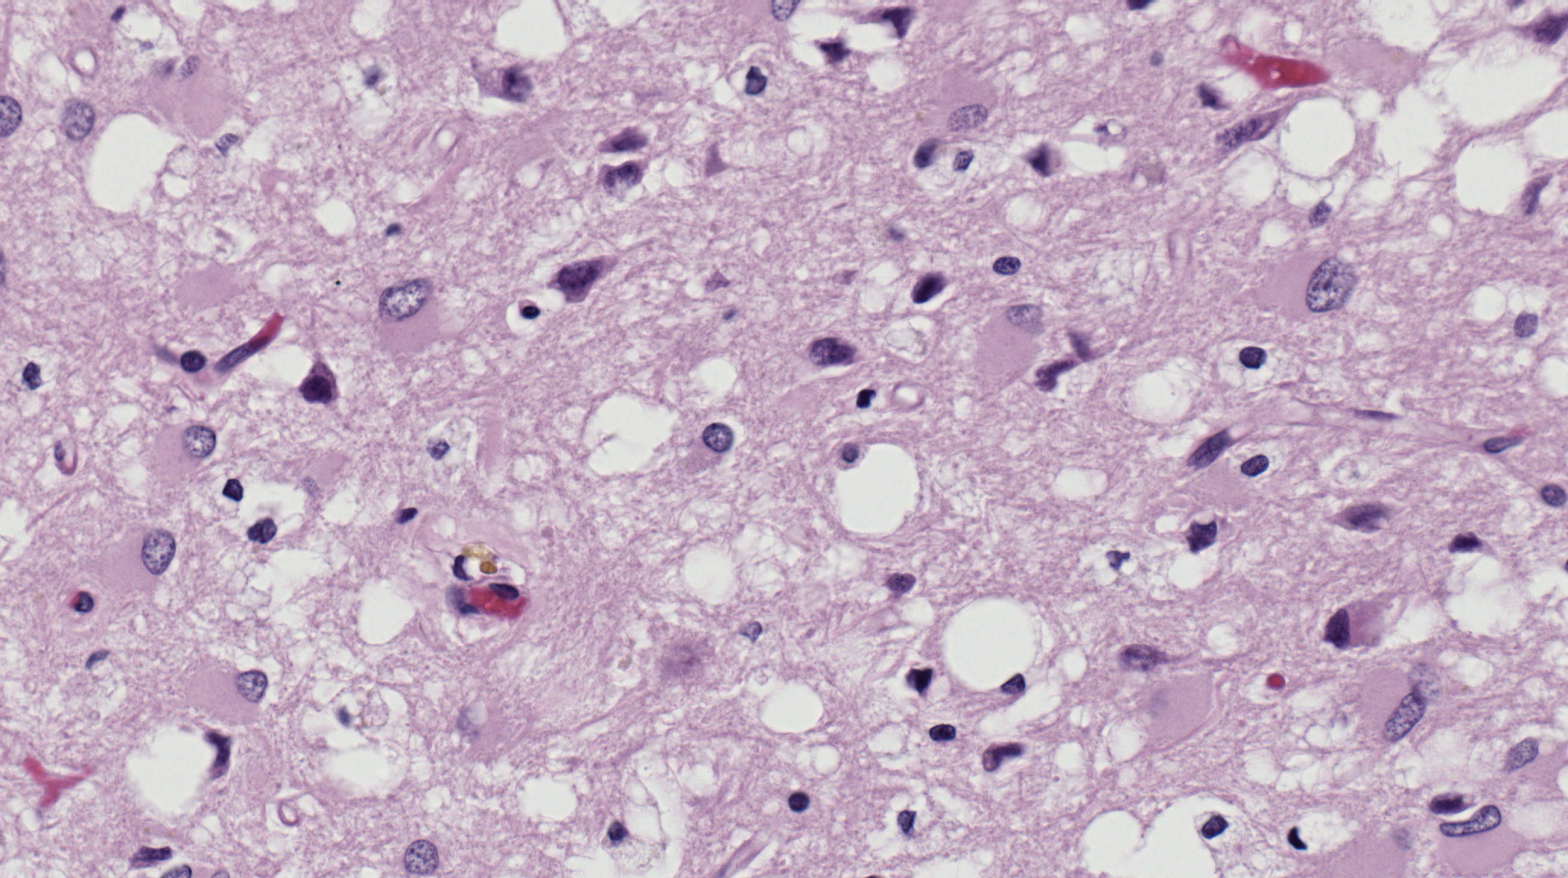 An image of a human brain tissue specimen under a microscope. It displays the telltale spongy holes caused by Creutzfeldt-Jakob disease. (Image: Sherif Zaki, Wun-Ju Shieh/CDC)